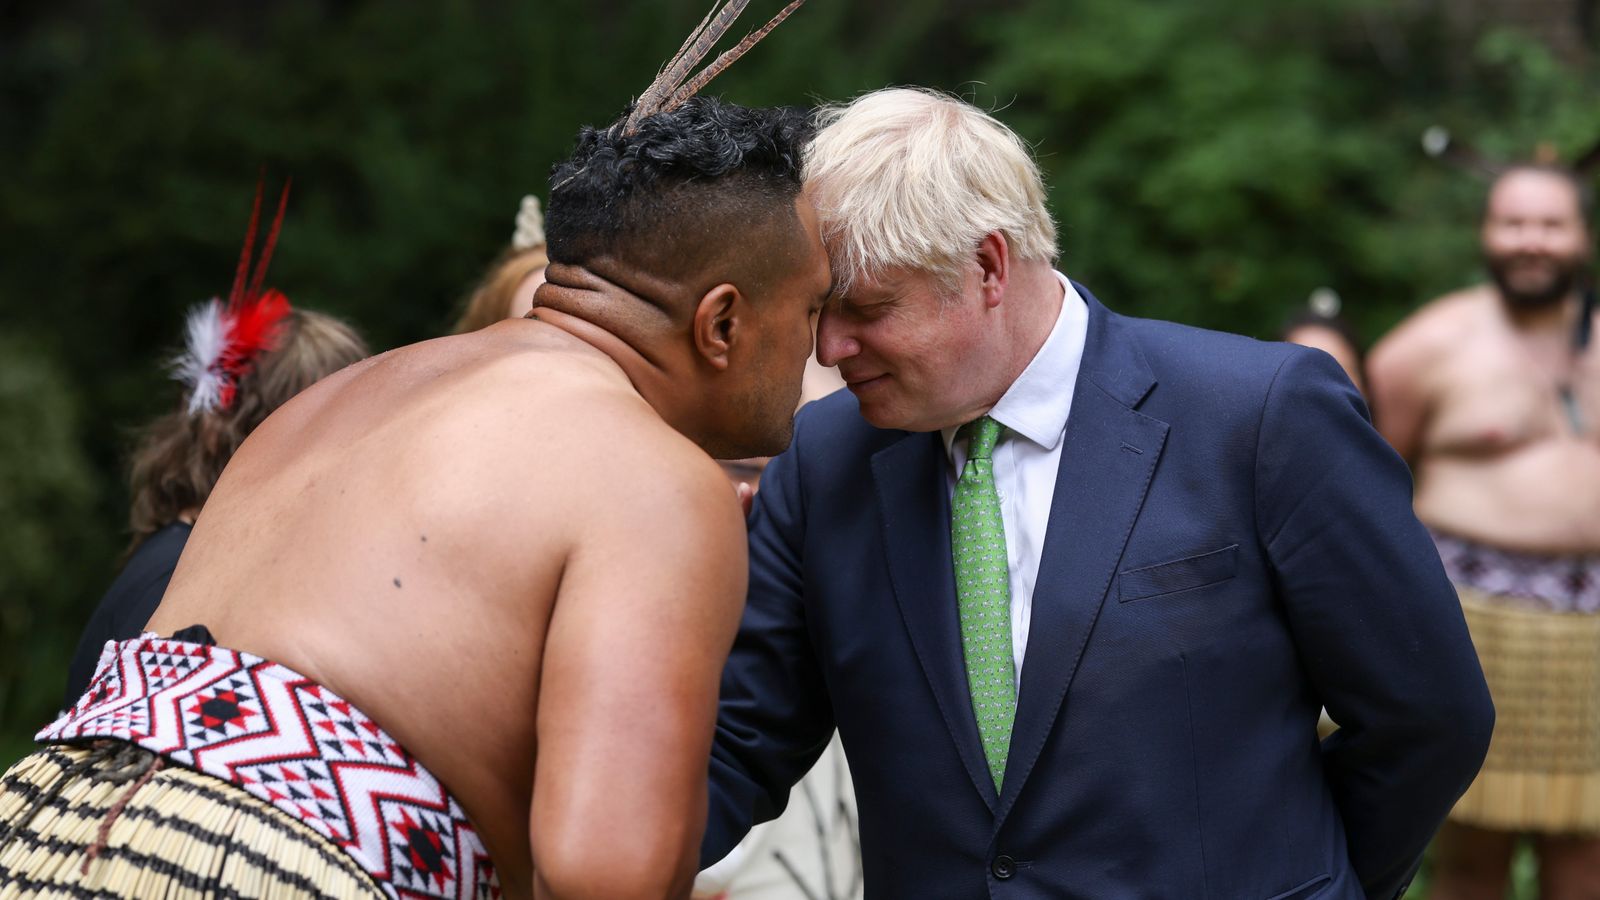 Haka performance in Downing Street as Boris Johnson welcomes New Zealand PM Jacinda Ardern | Politics News